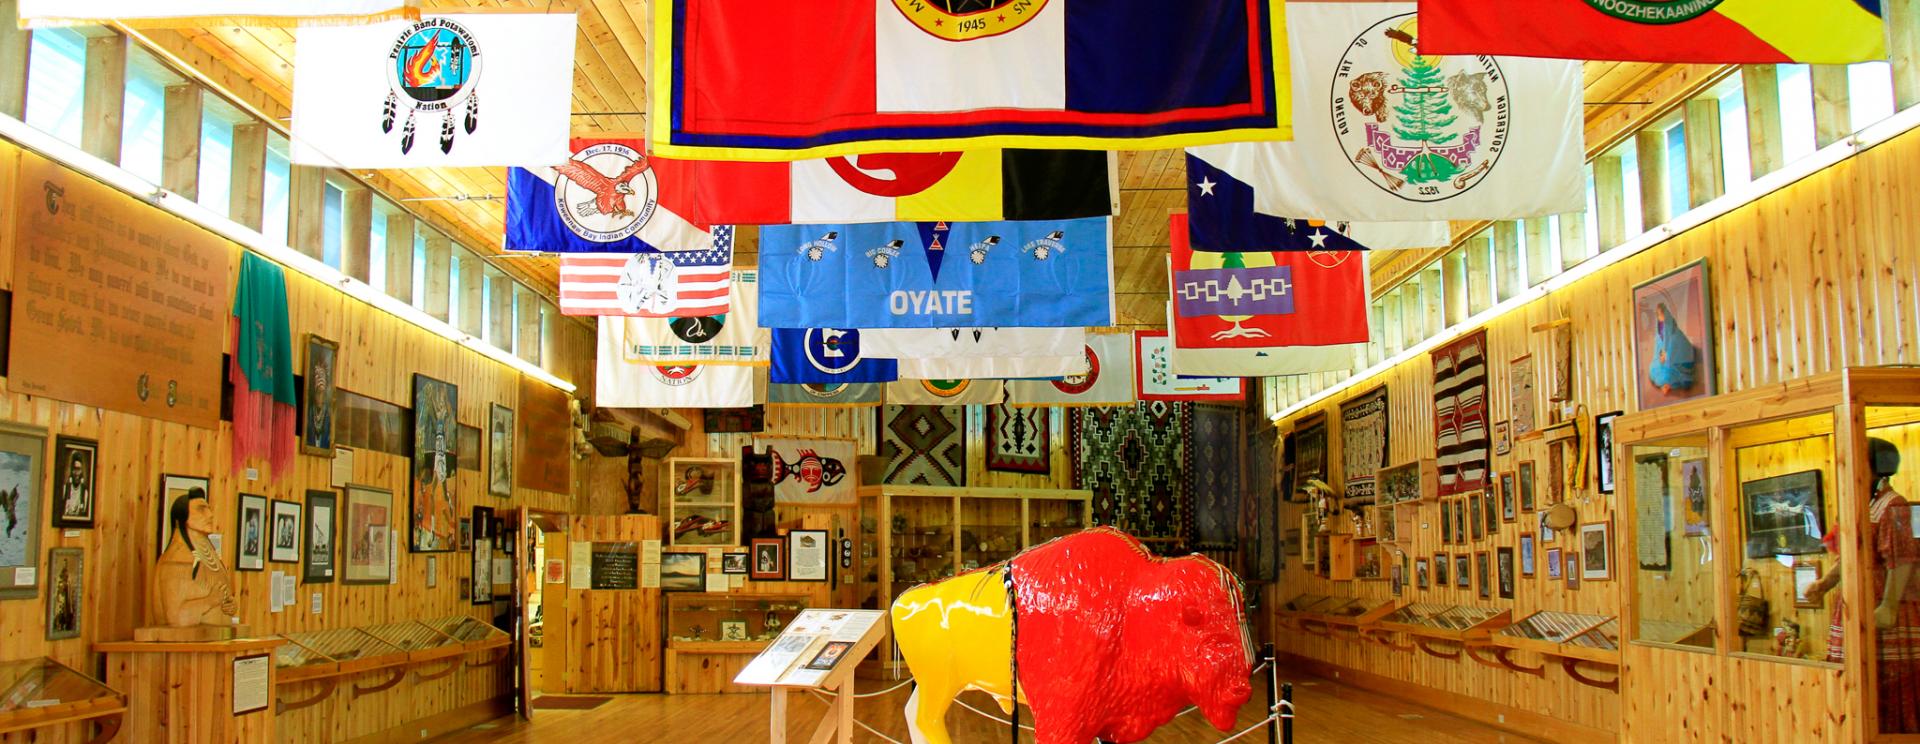 Crazy Horse Orientation & Communications Center